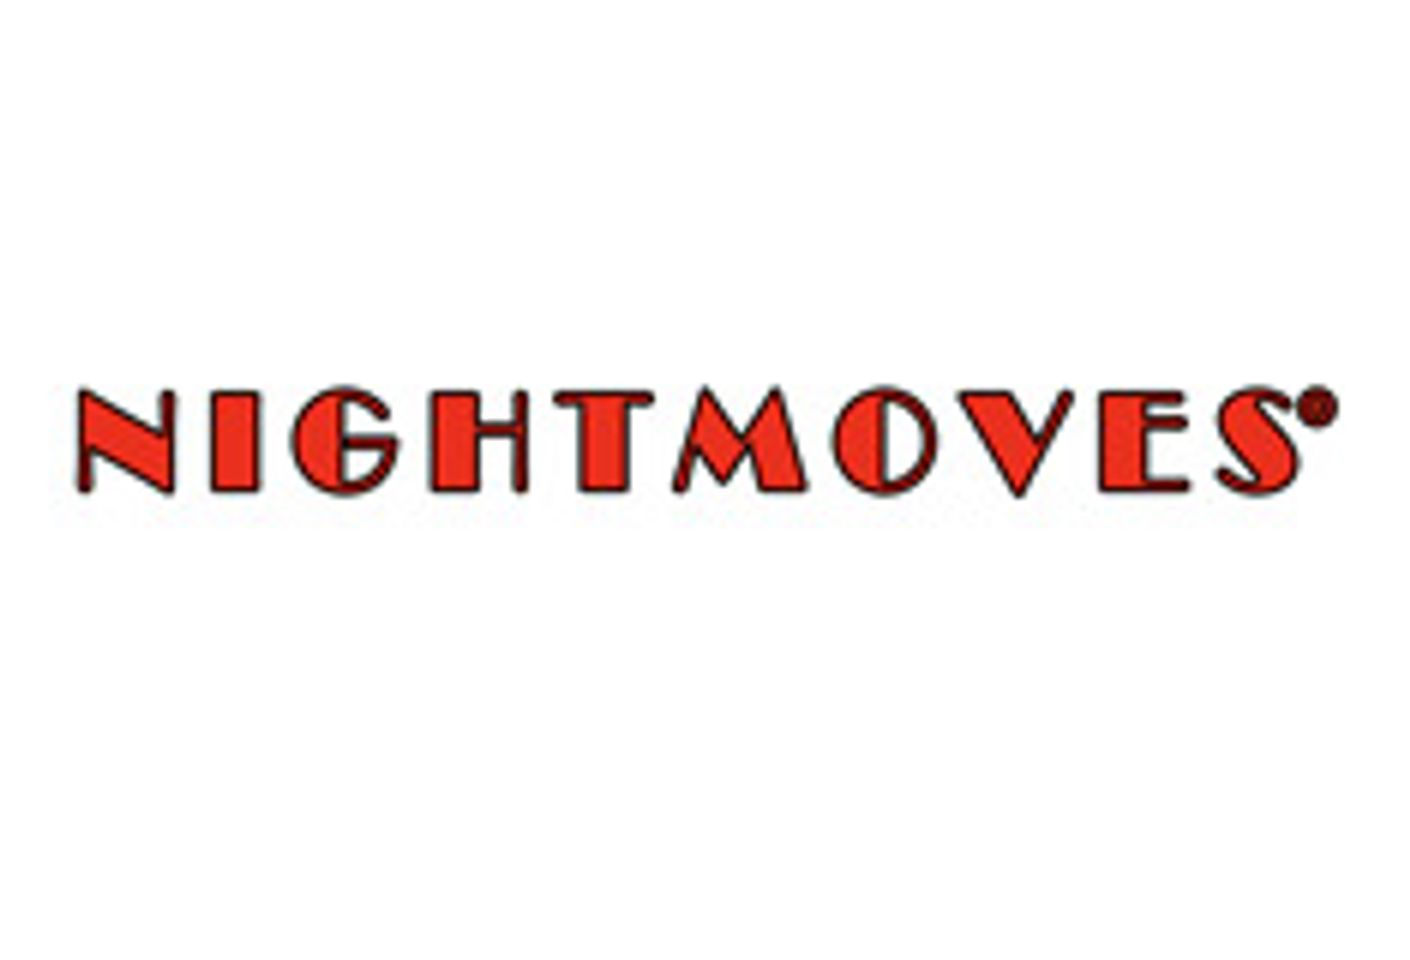 Brandi Love Gets First Win at NightMoves Awards